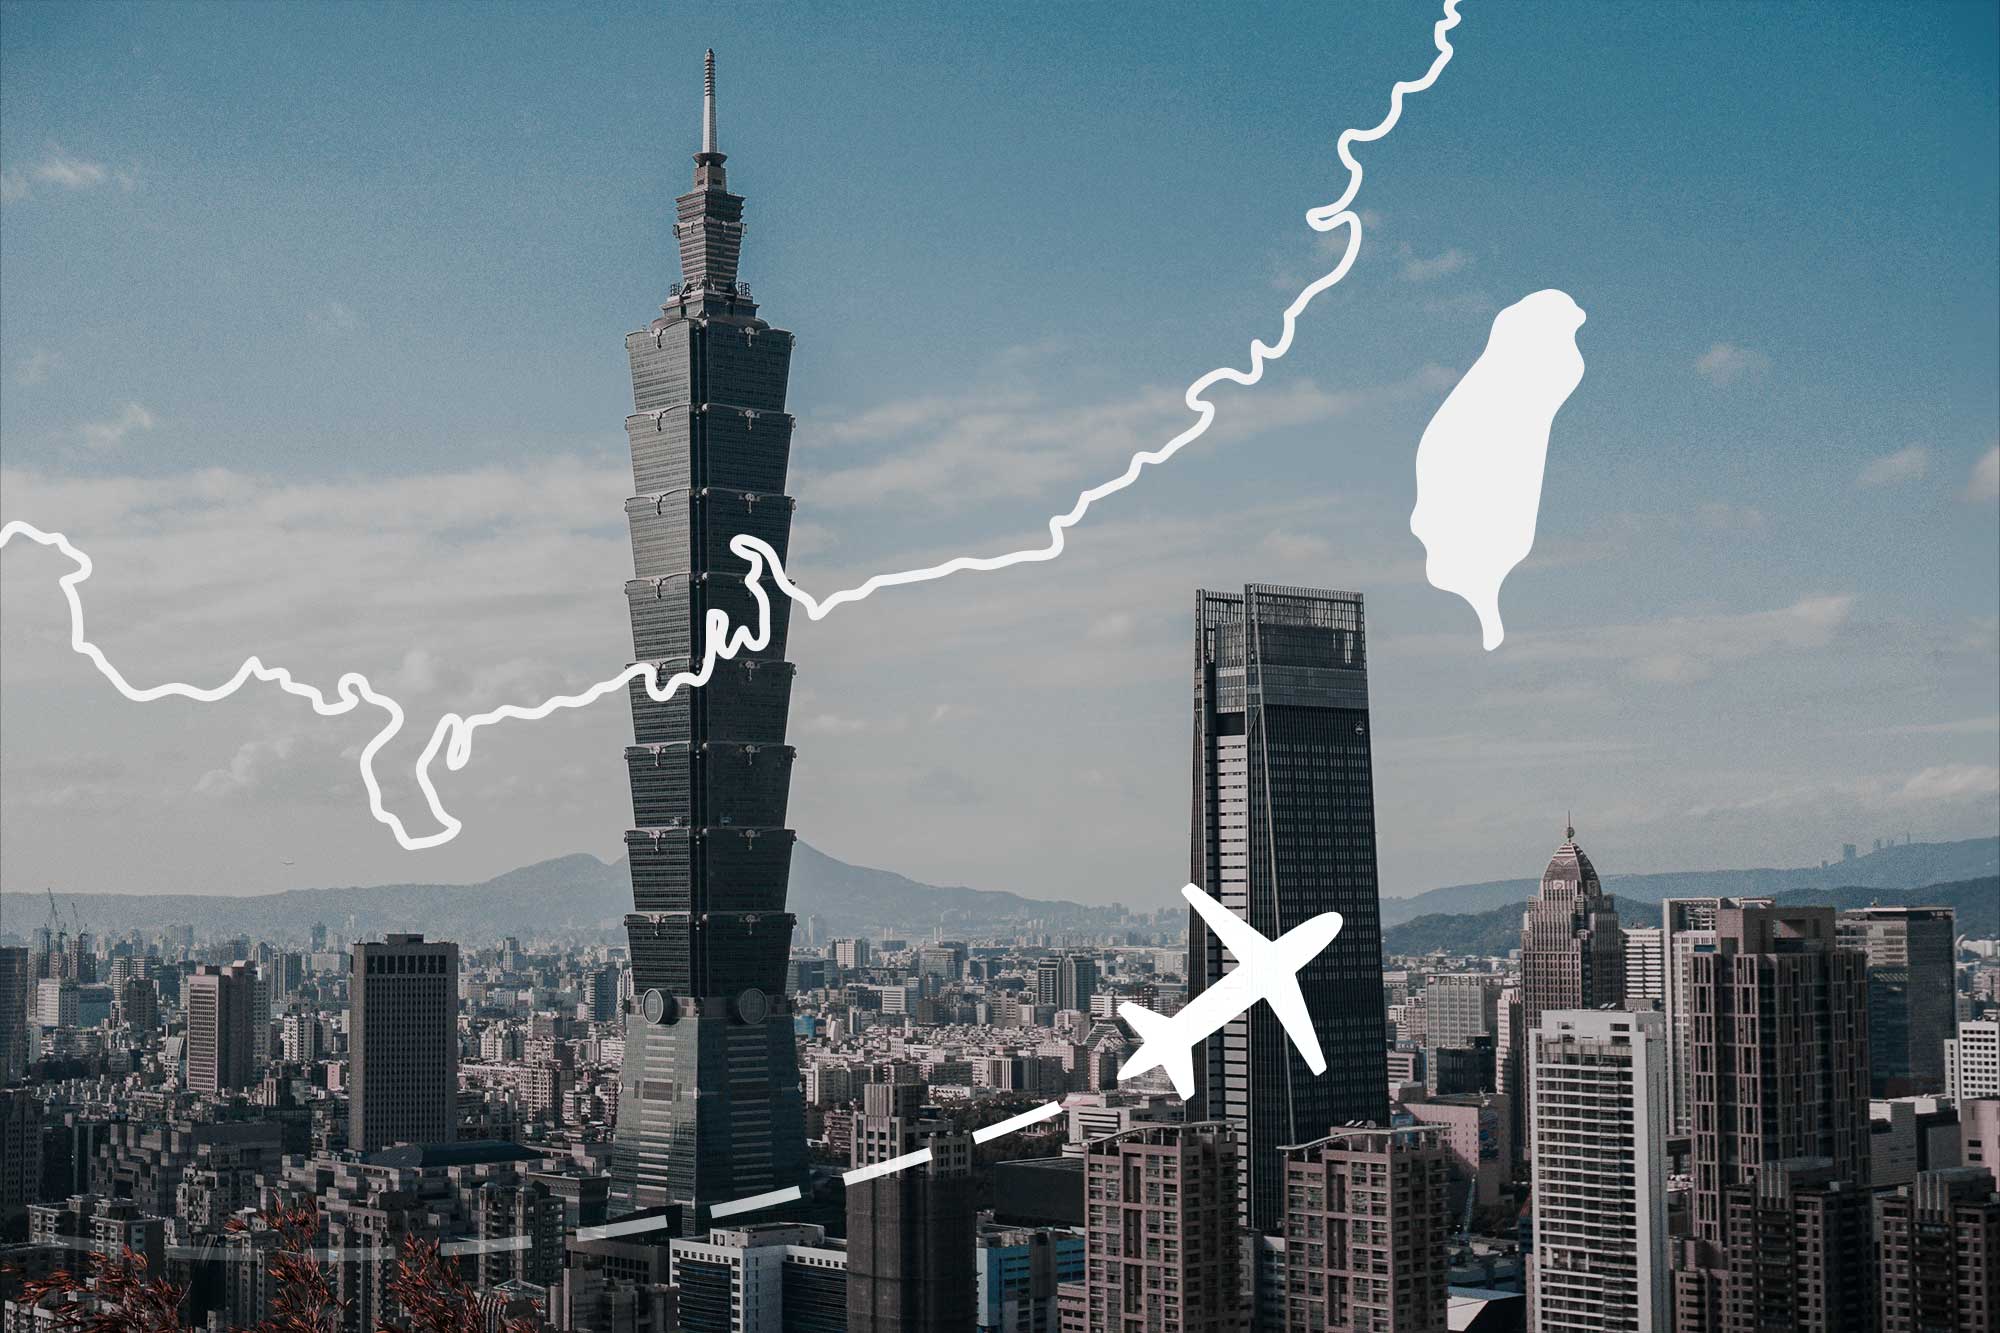 A plane heads toward Taiwan